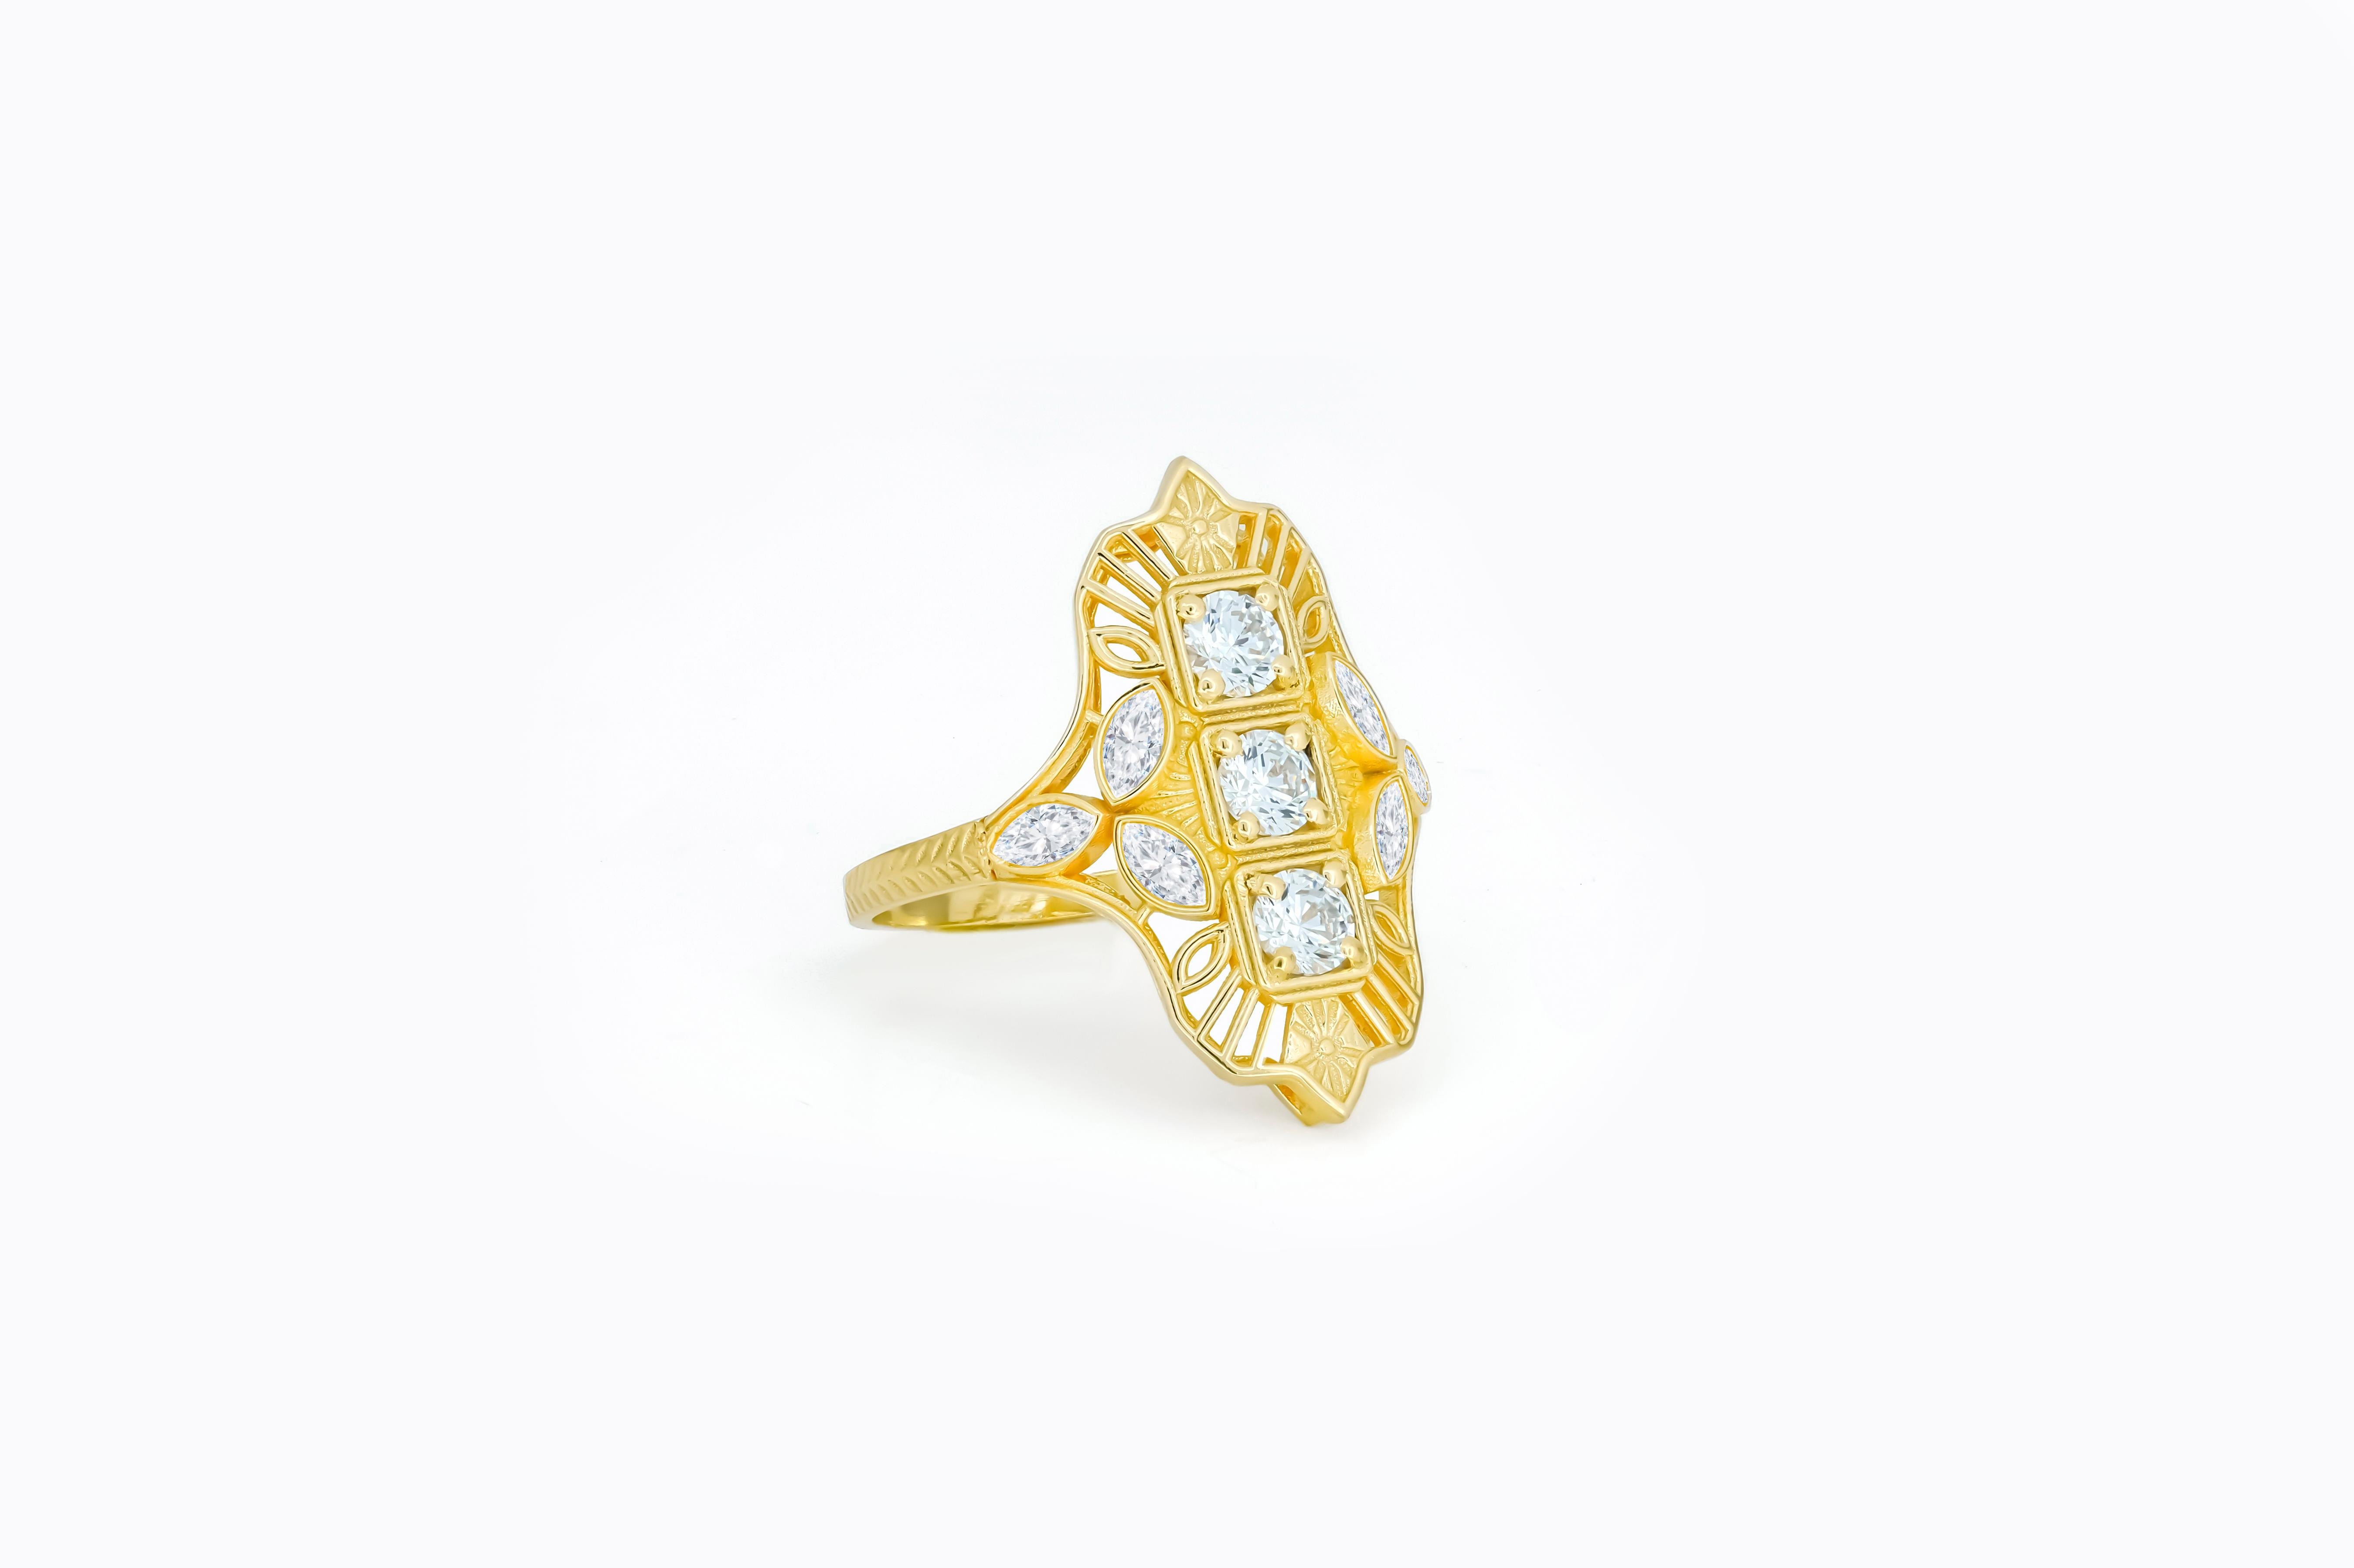 For Sale:  Vintage style moissanite 14k gold engagement ring. 5